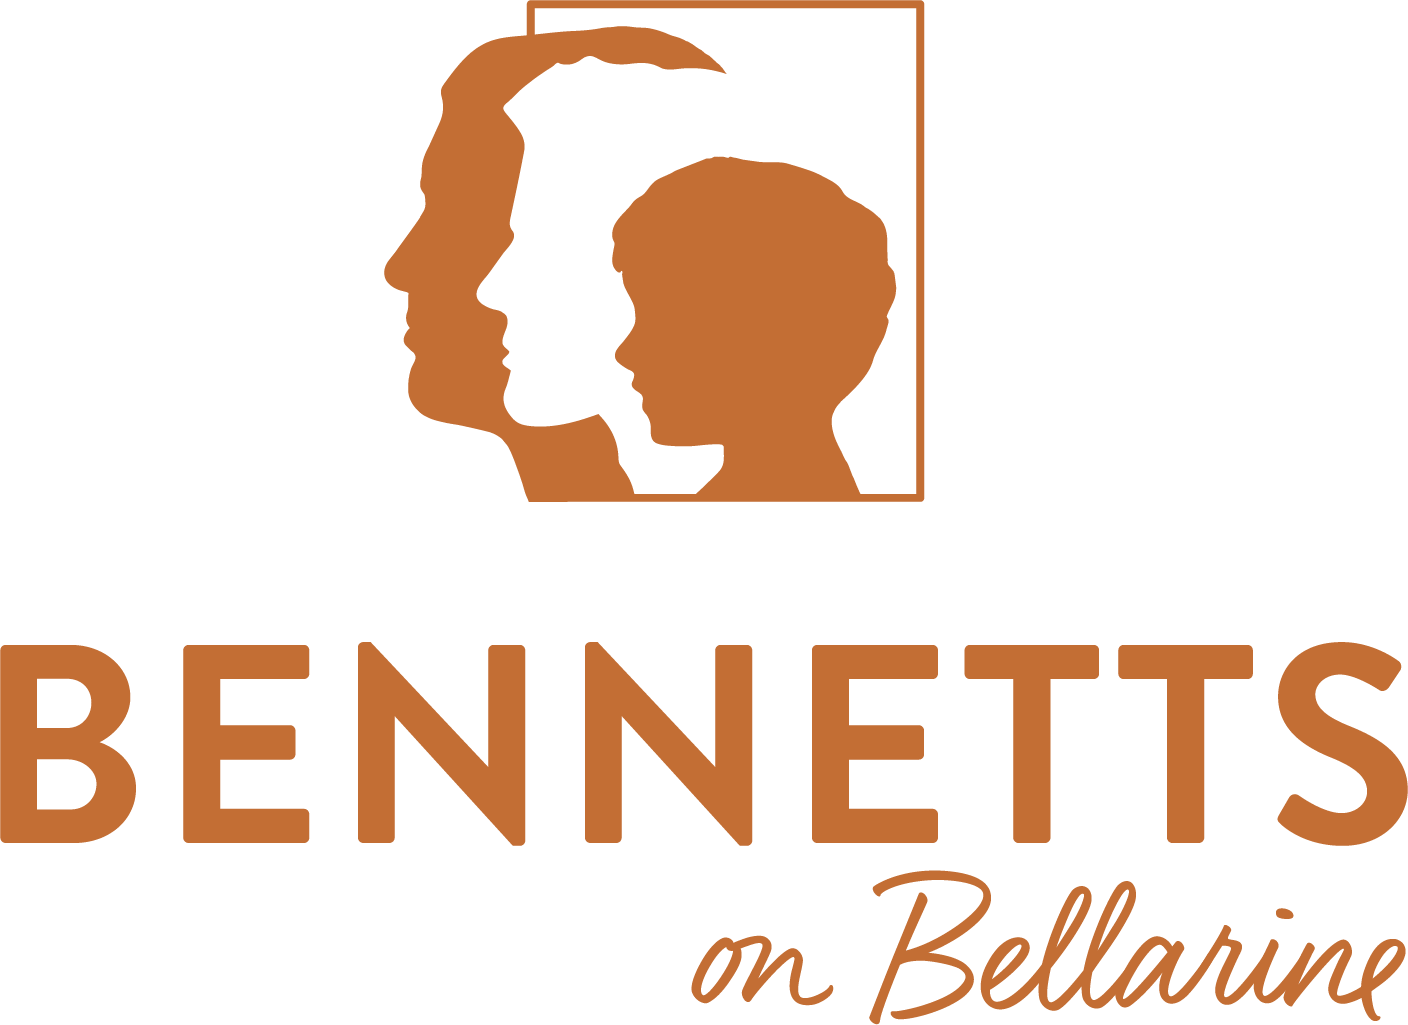 Bennetts On Bellarine